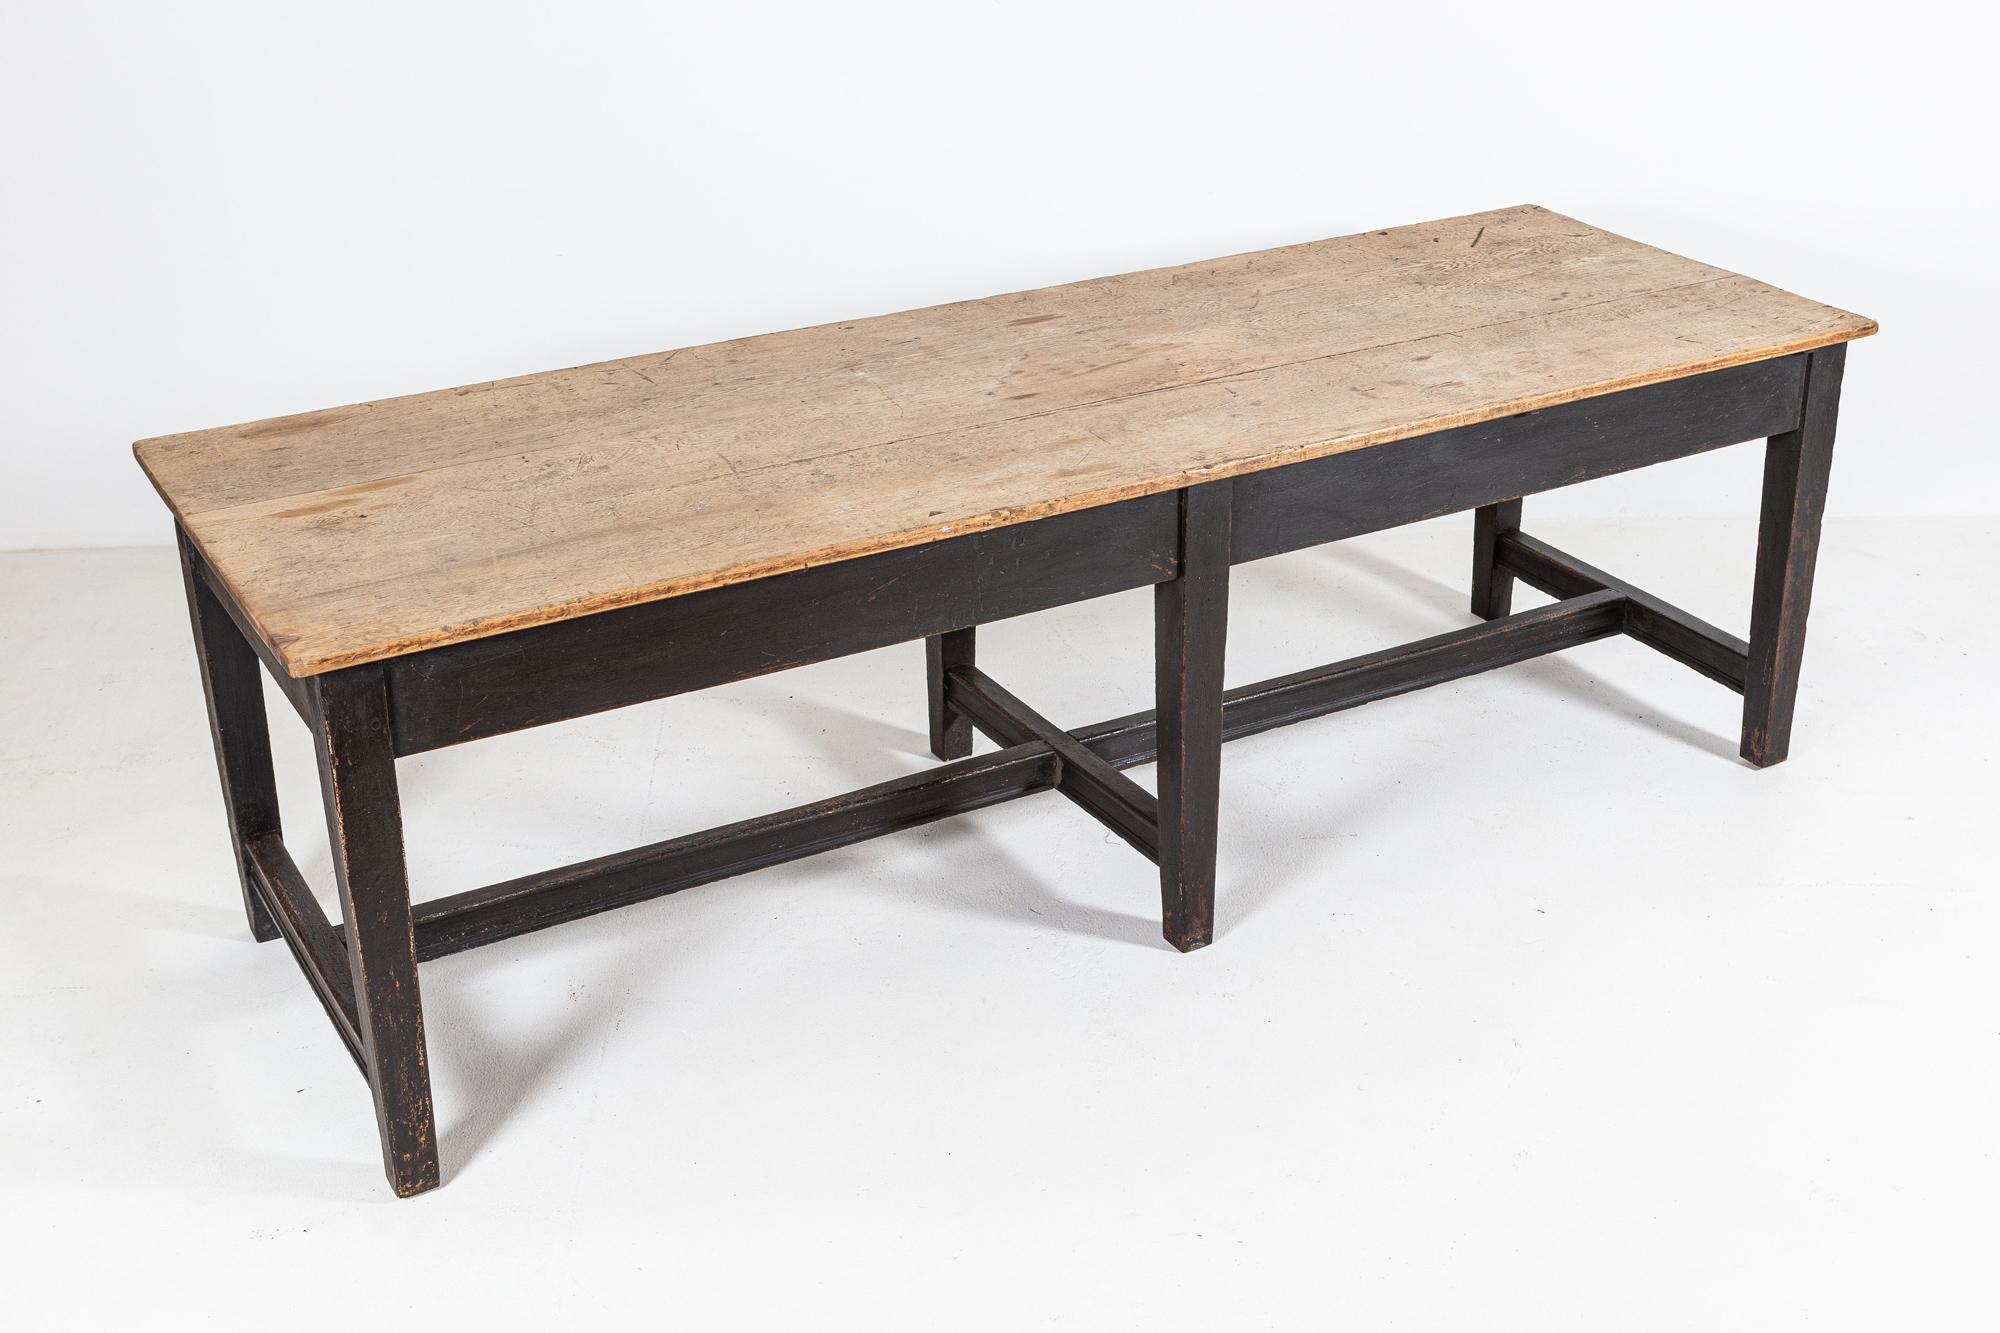 Circa 1880

19thC English 3 plank oak refectory table

 

Measures: W244 x D82 x H76 cm.